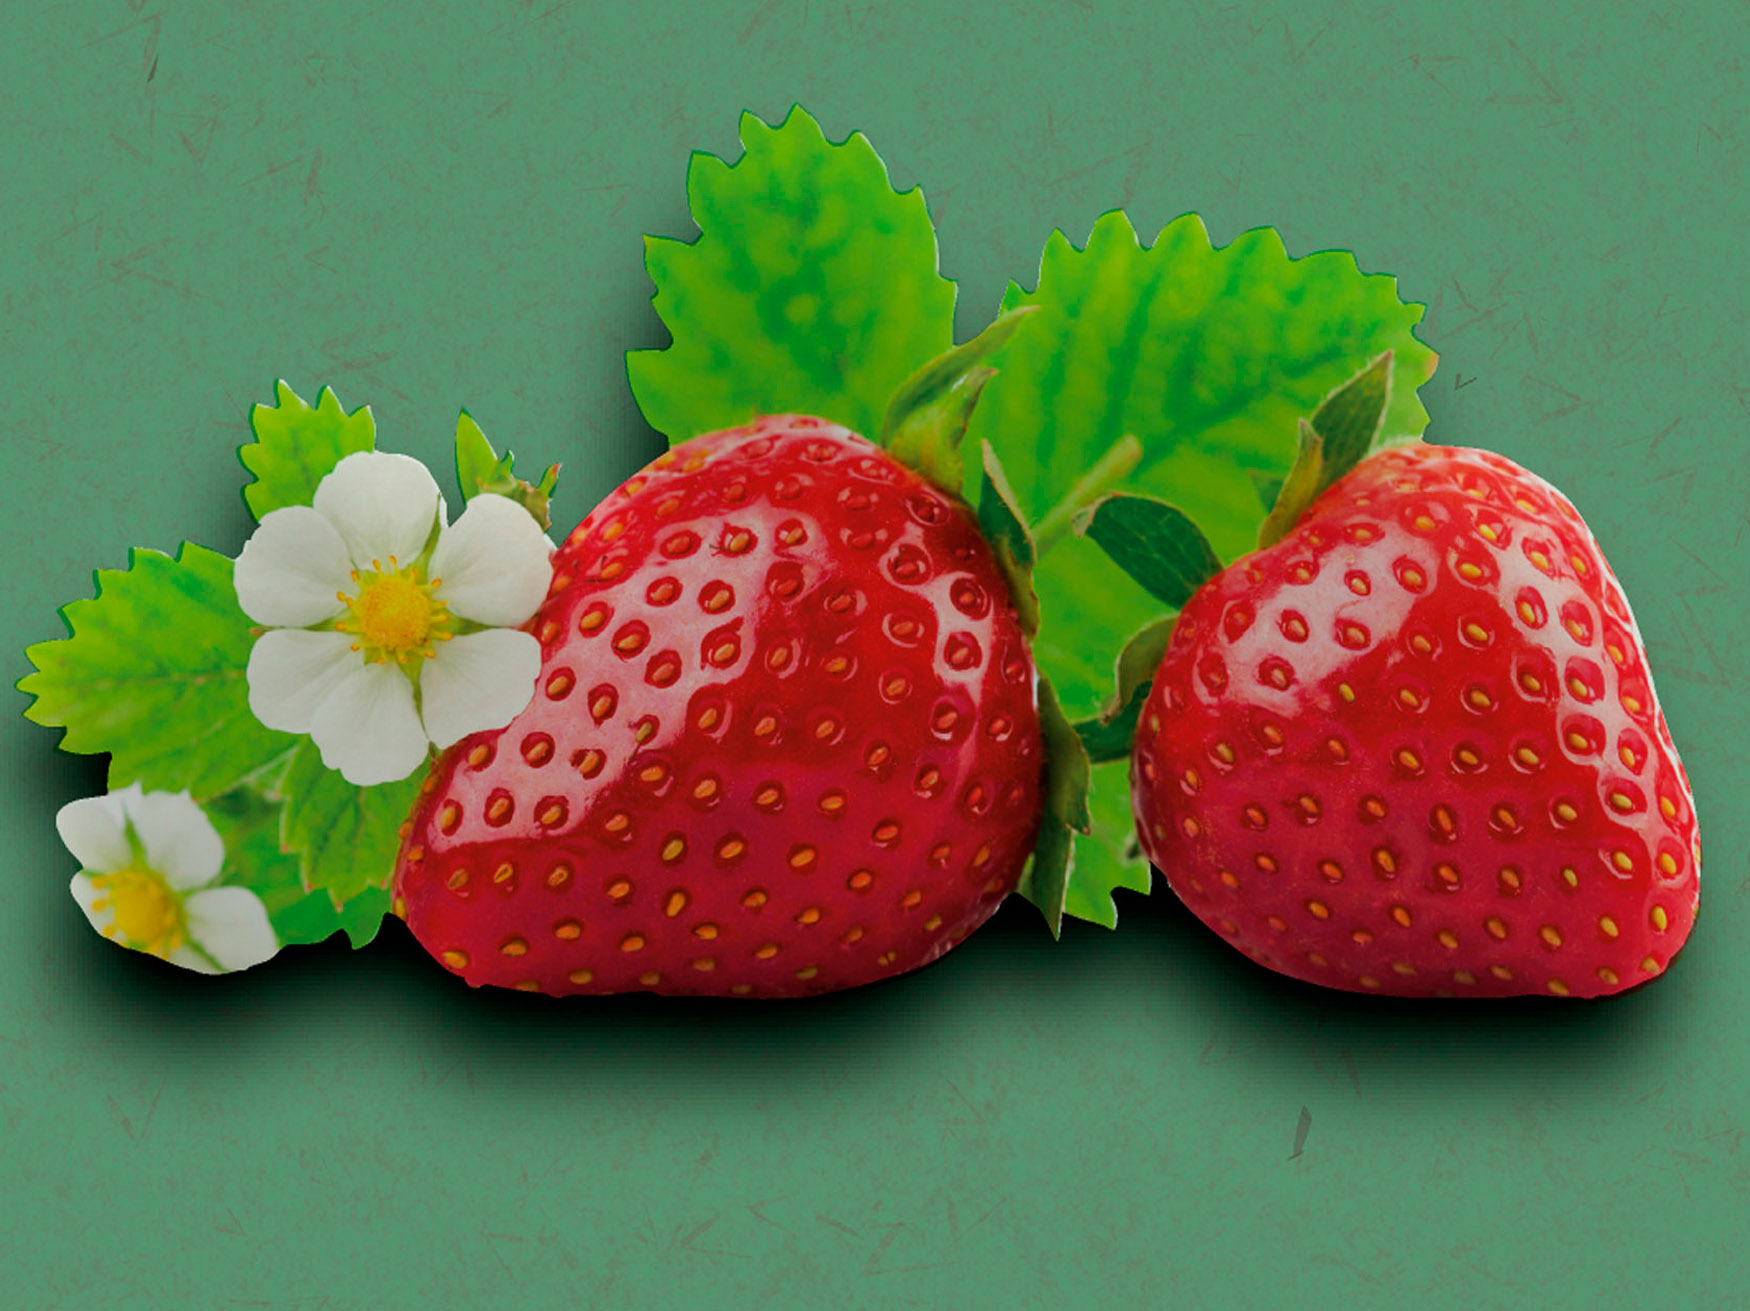 Strawberry Graphic